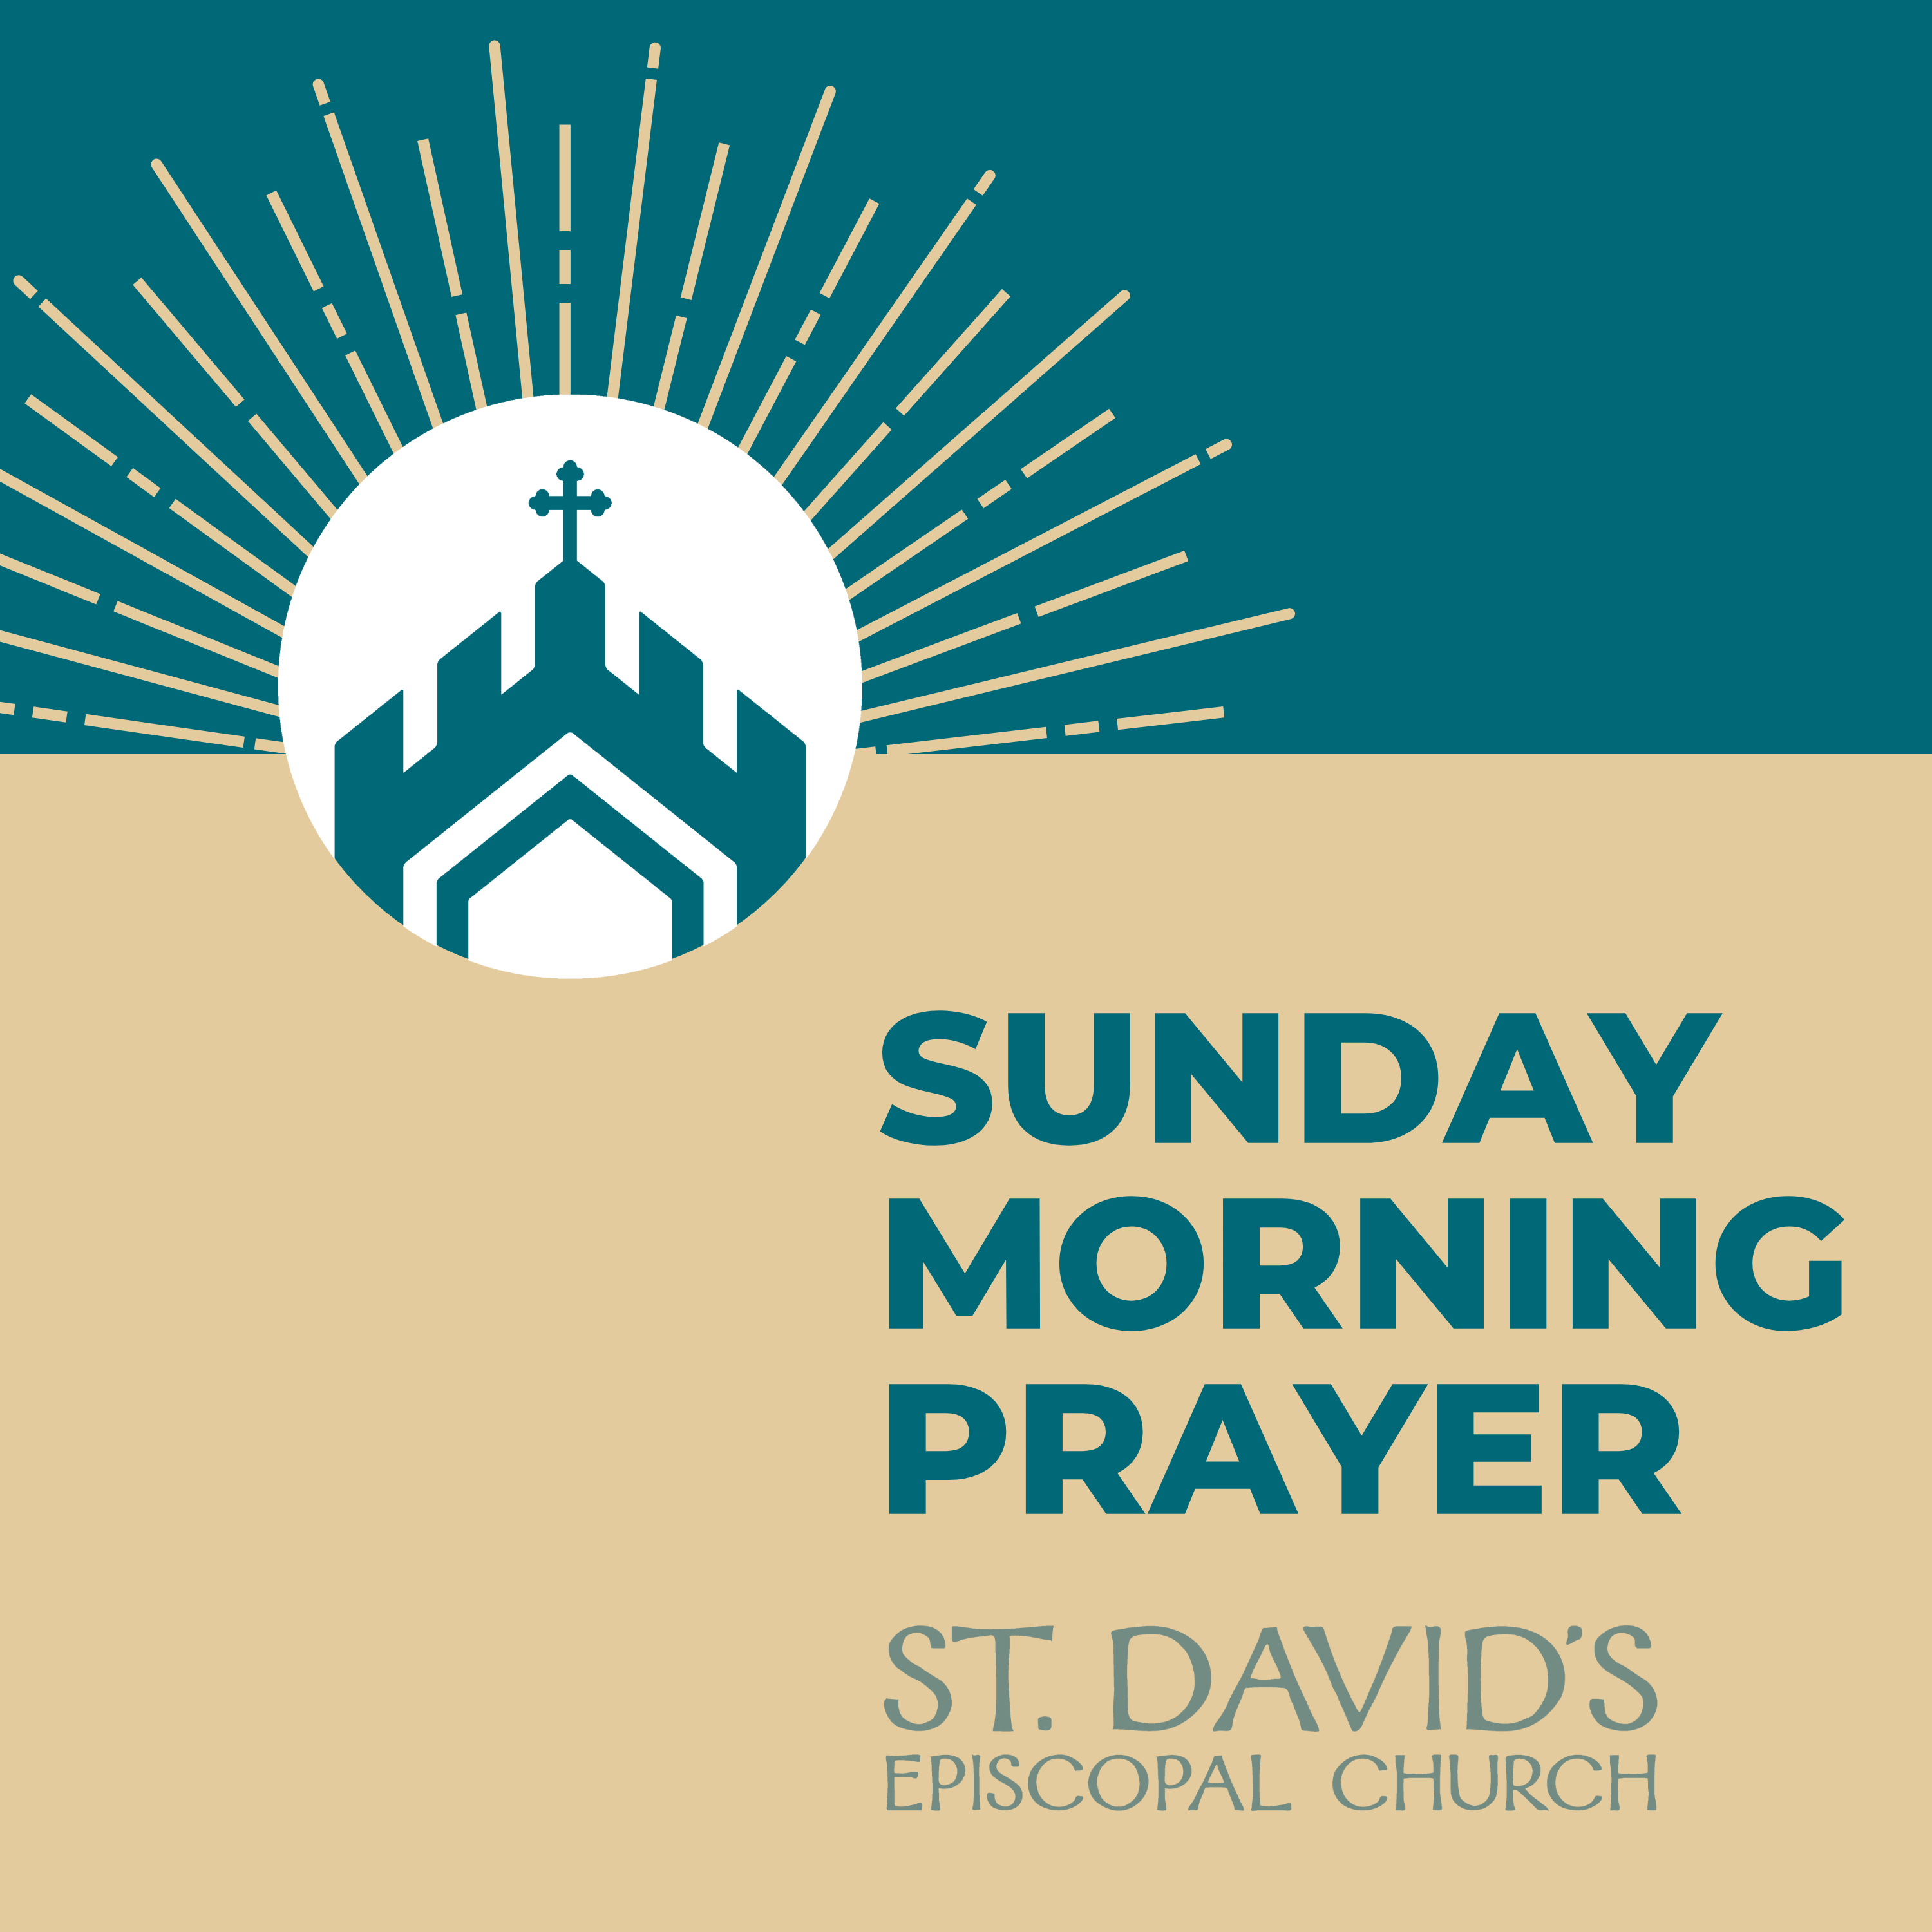 Sunday Morning Prayer: Rite Two, Year 2, 23rd Sunday after Pentecost